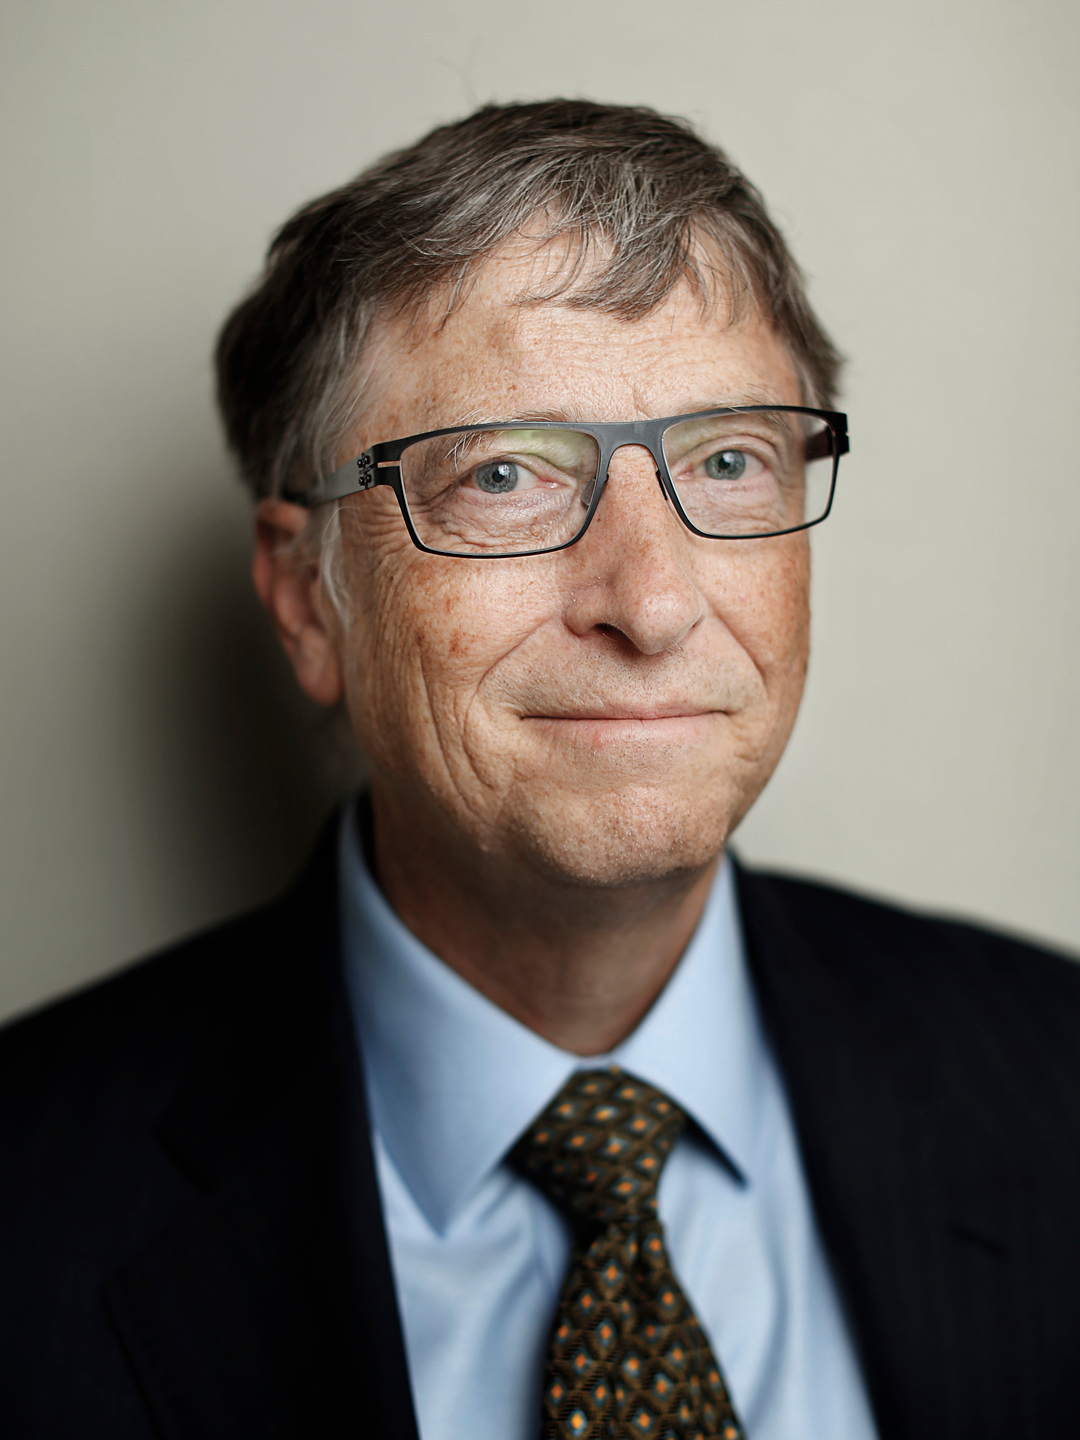 Bill Gates early life